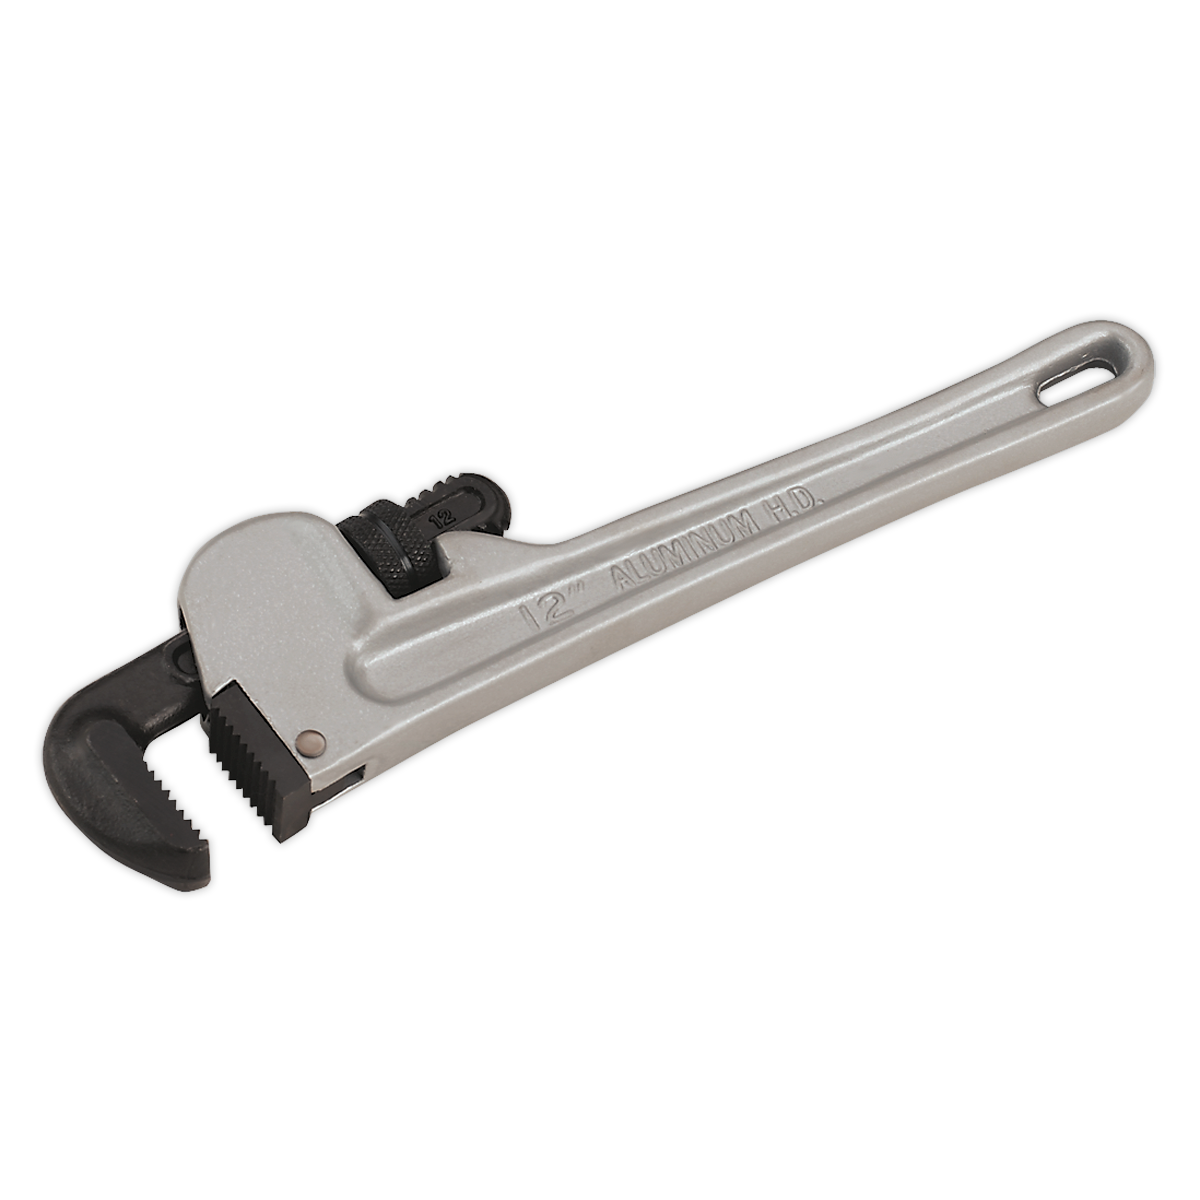 Sealey Pipe Wrench European Pattern 300mm Aluminium Alloy